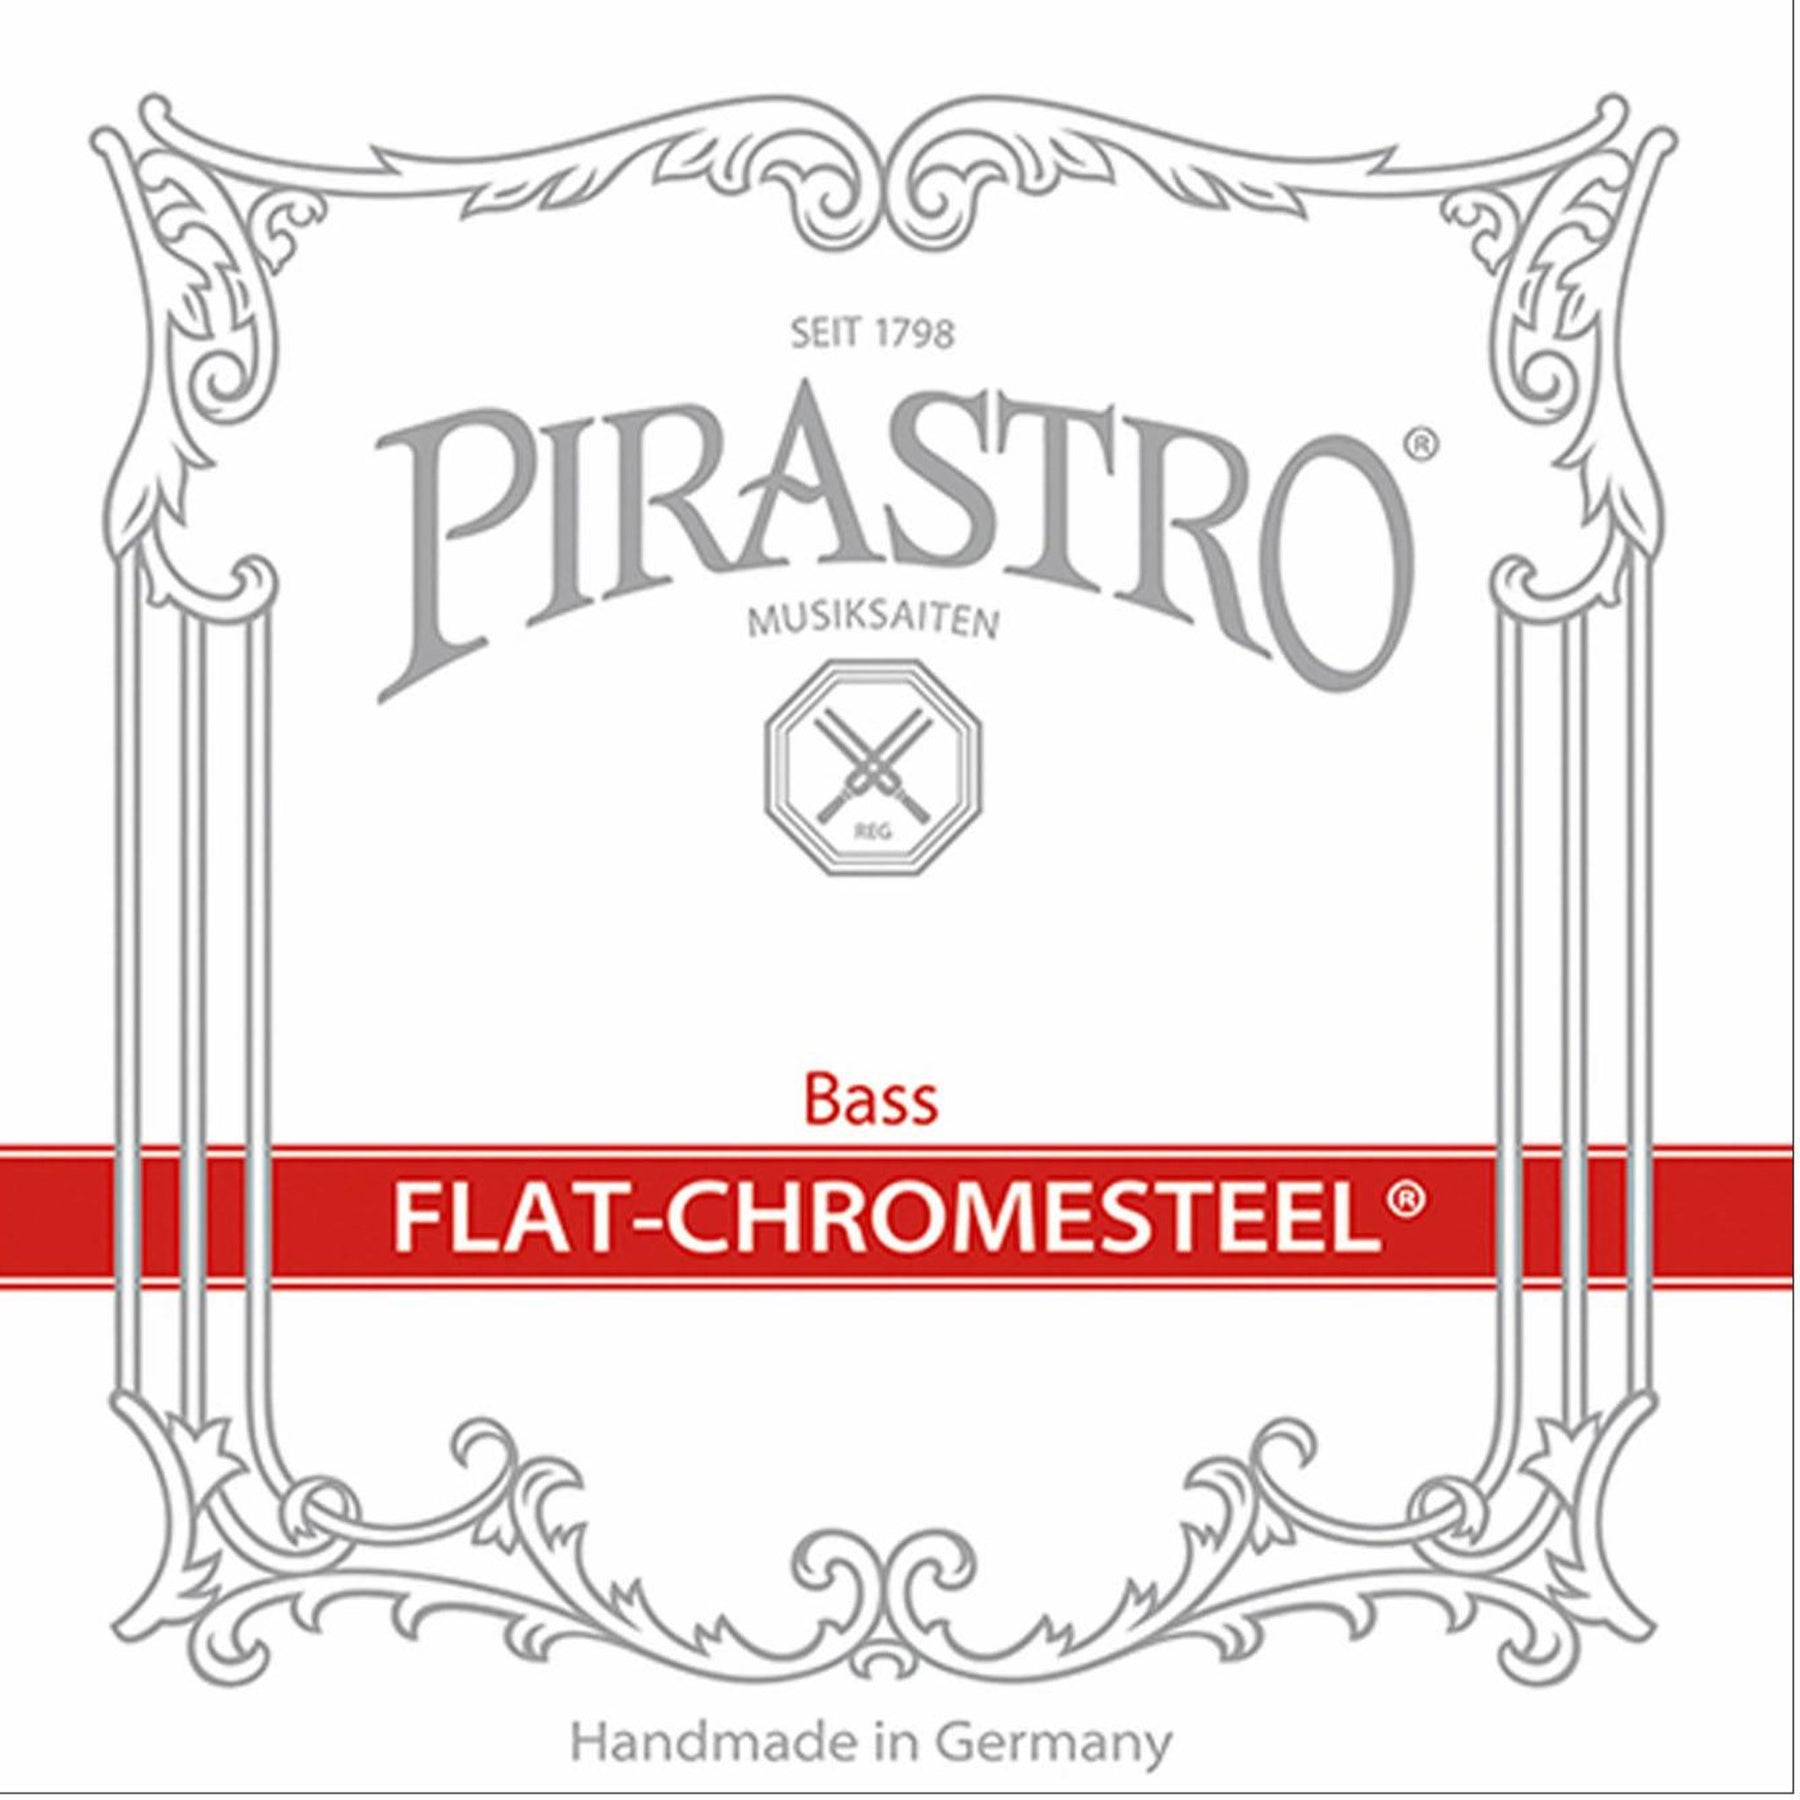 Pirastro Flat-Chromesteel Bass Cis5 String